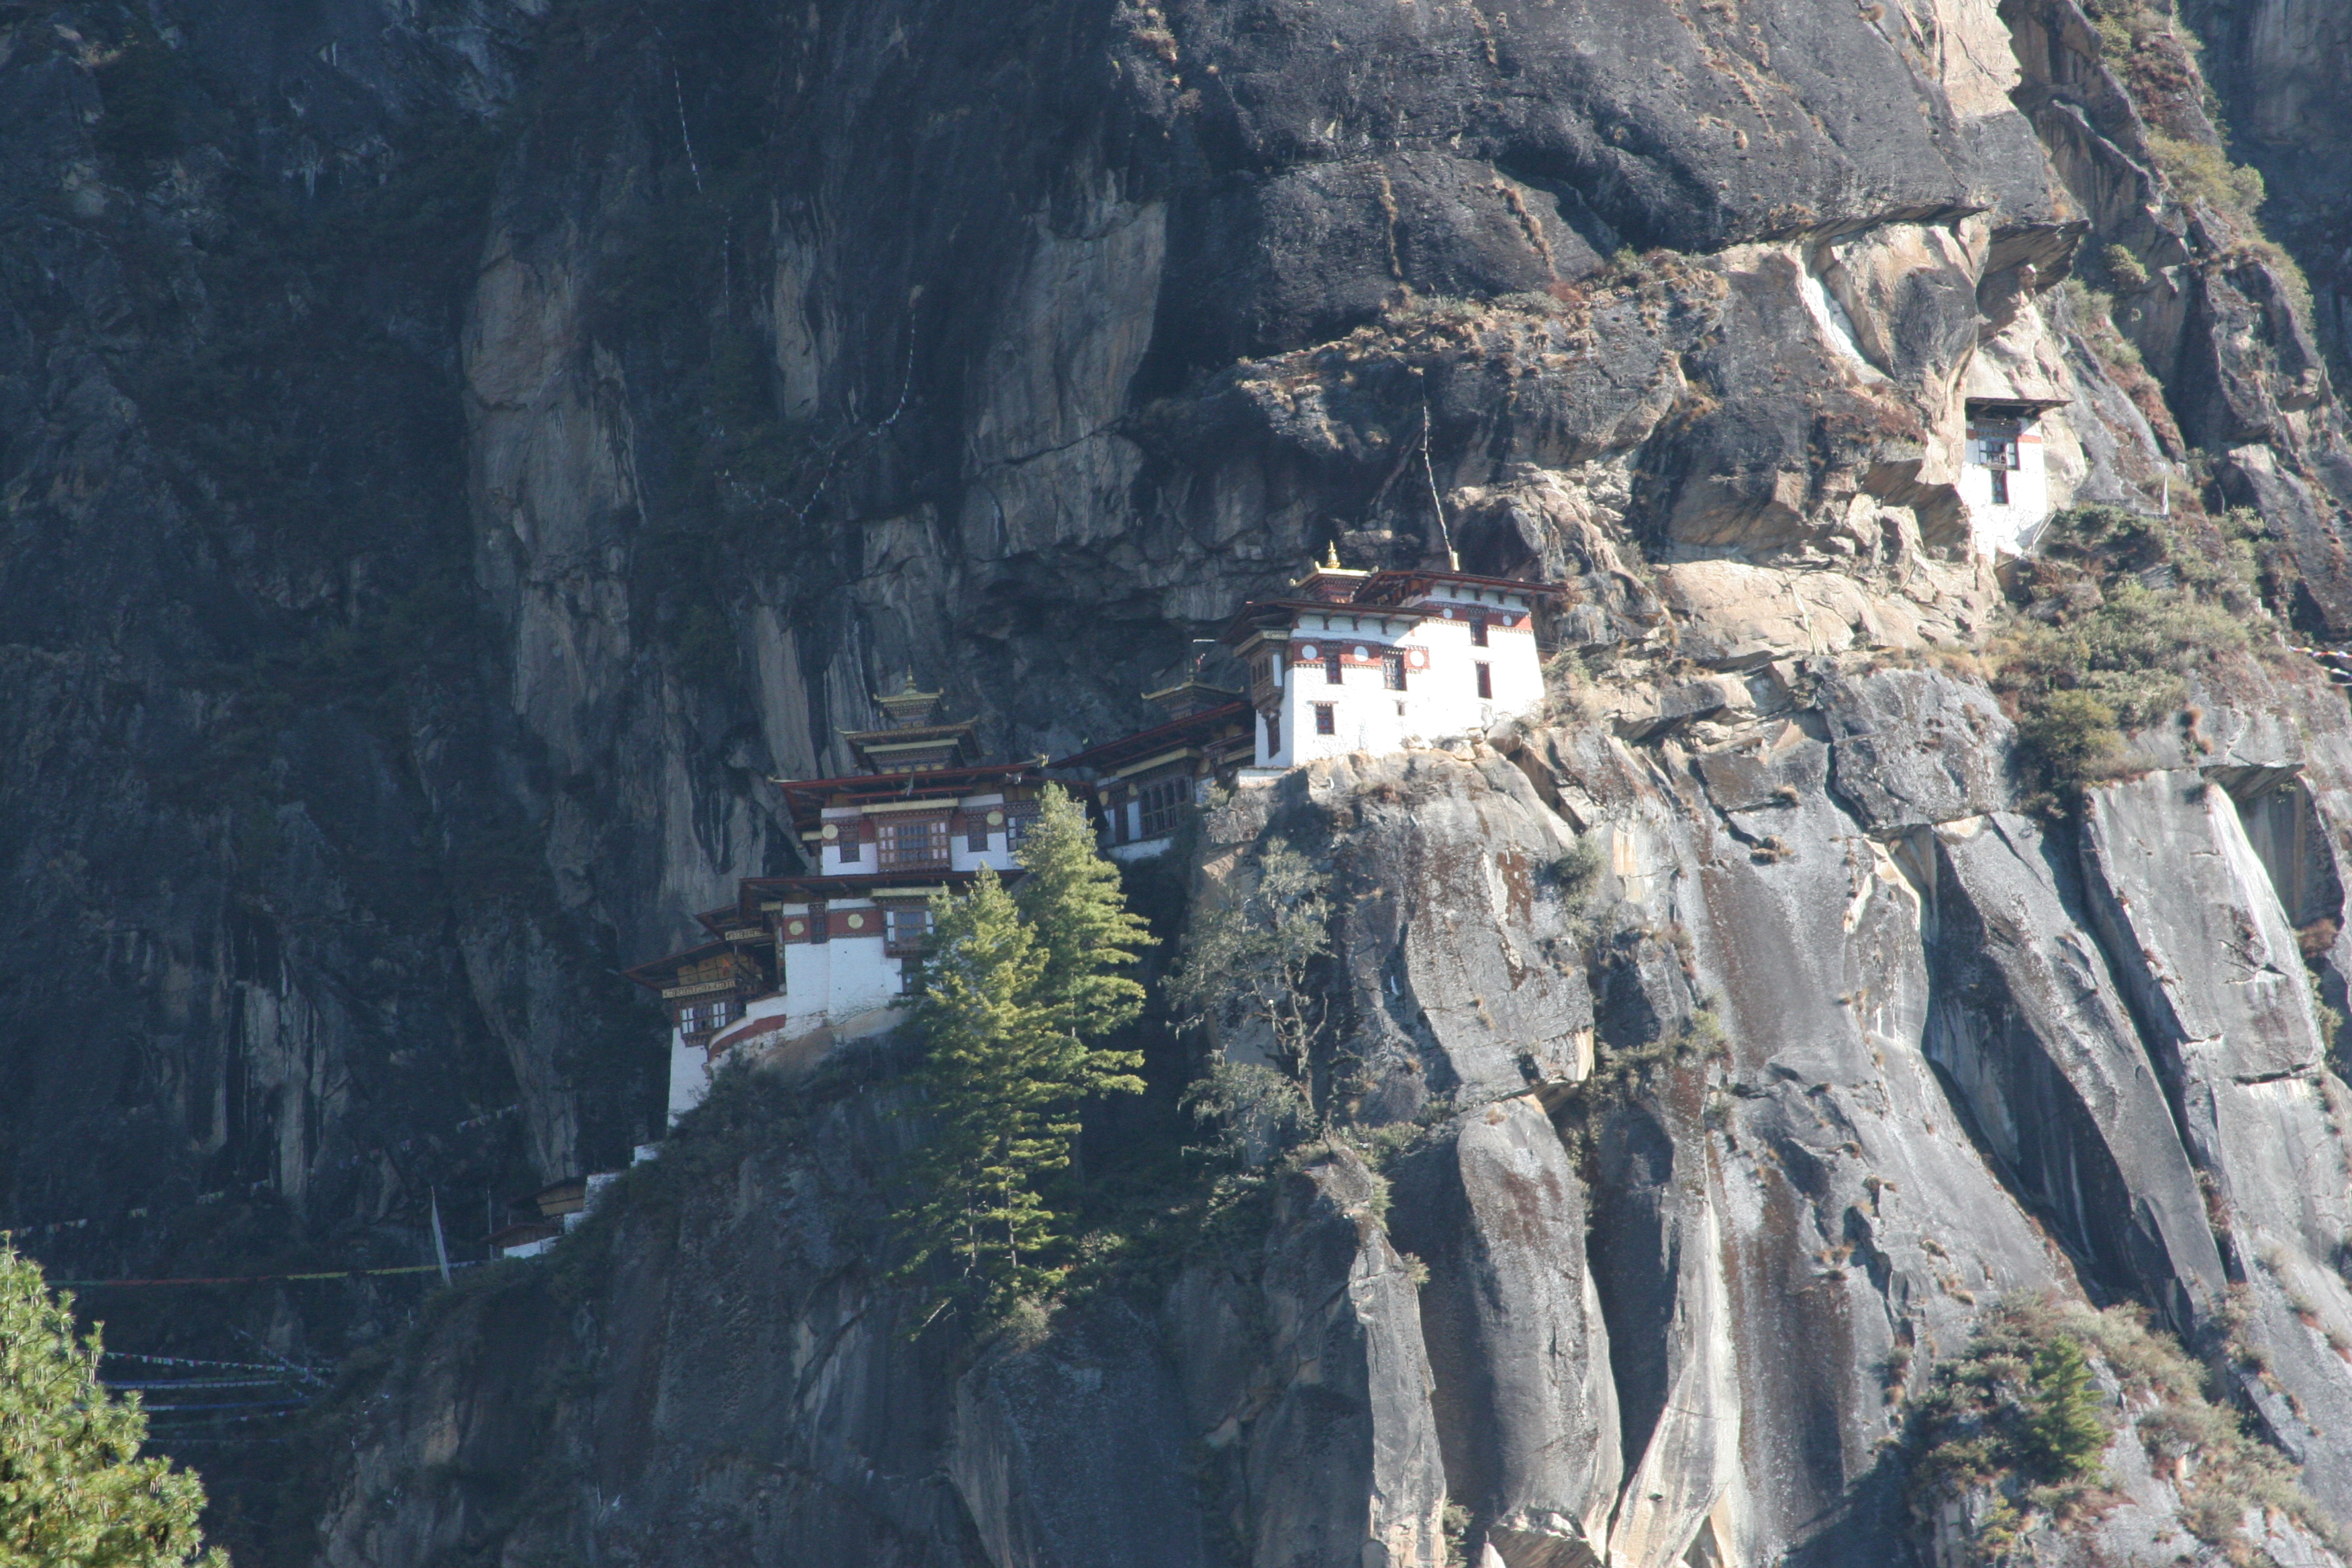 Bhutan Hiking To Tigers Nest Monastery Boundless Journeys